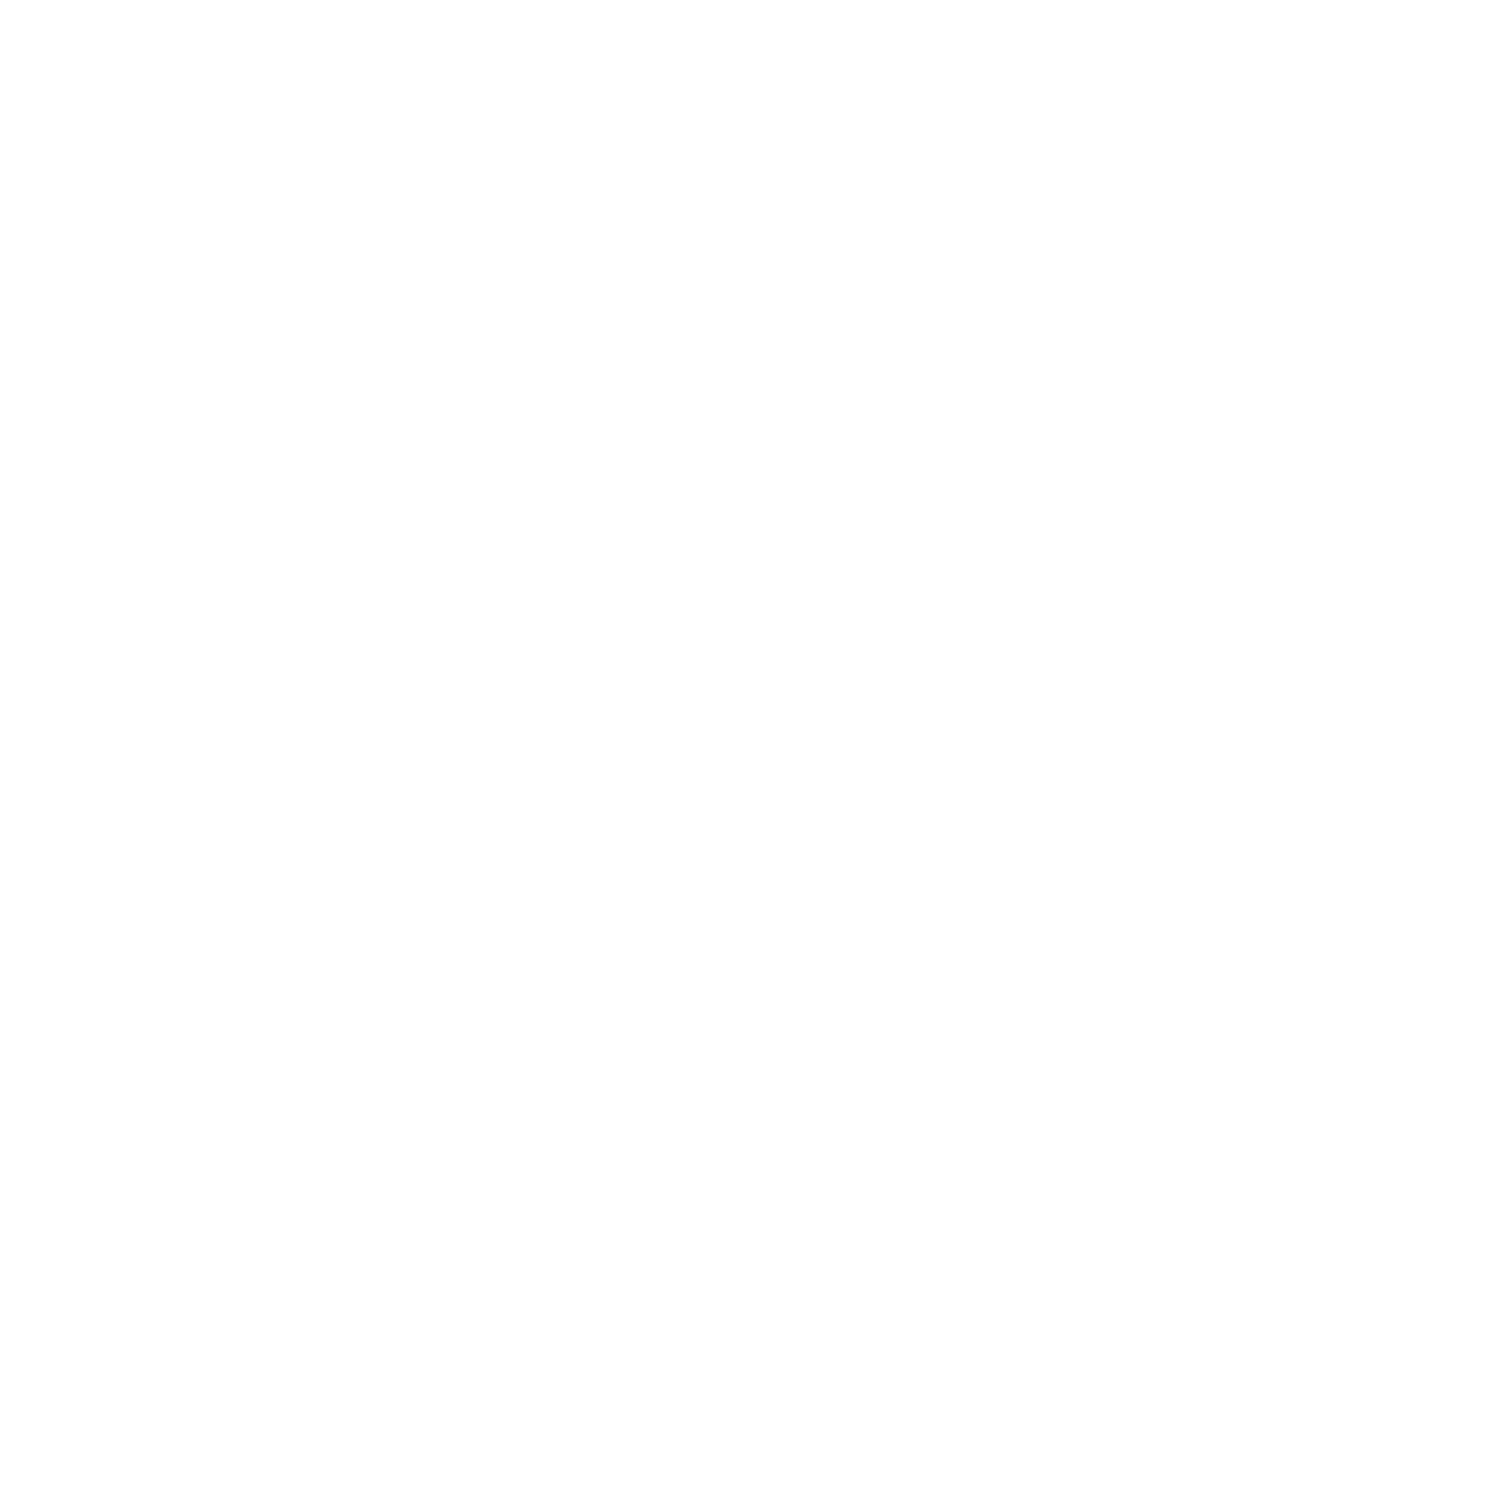 Jdynes Productions